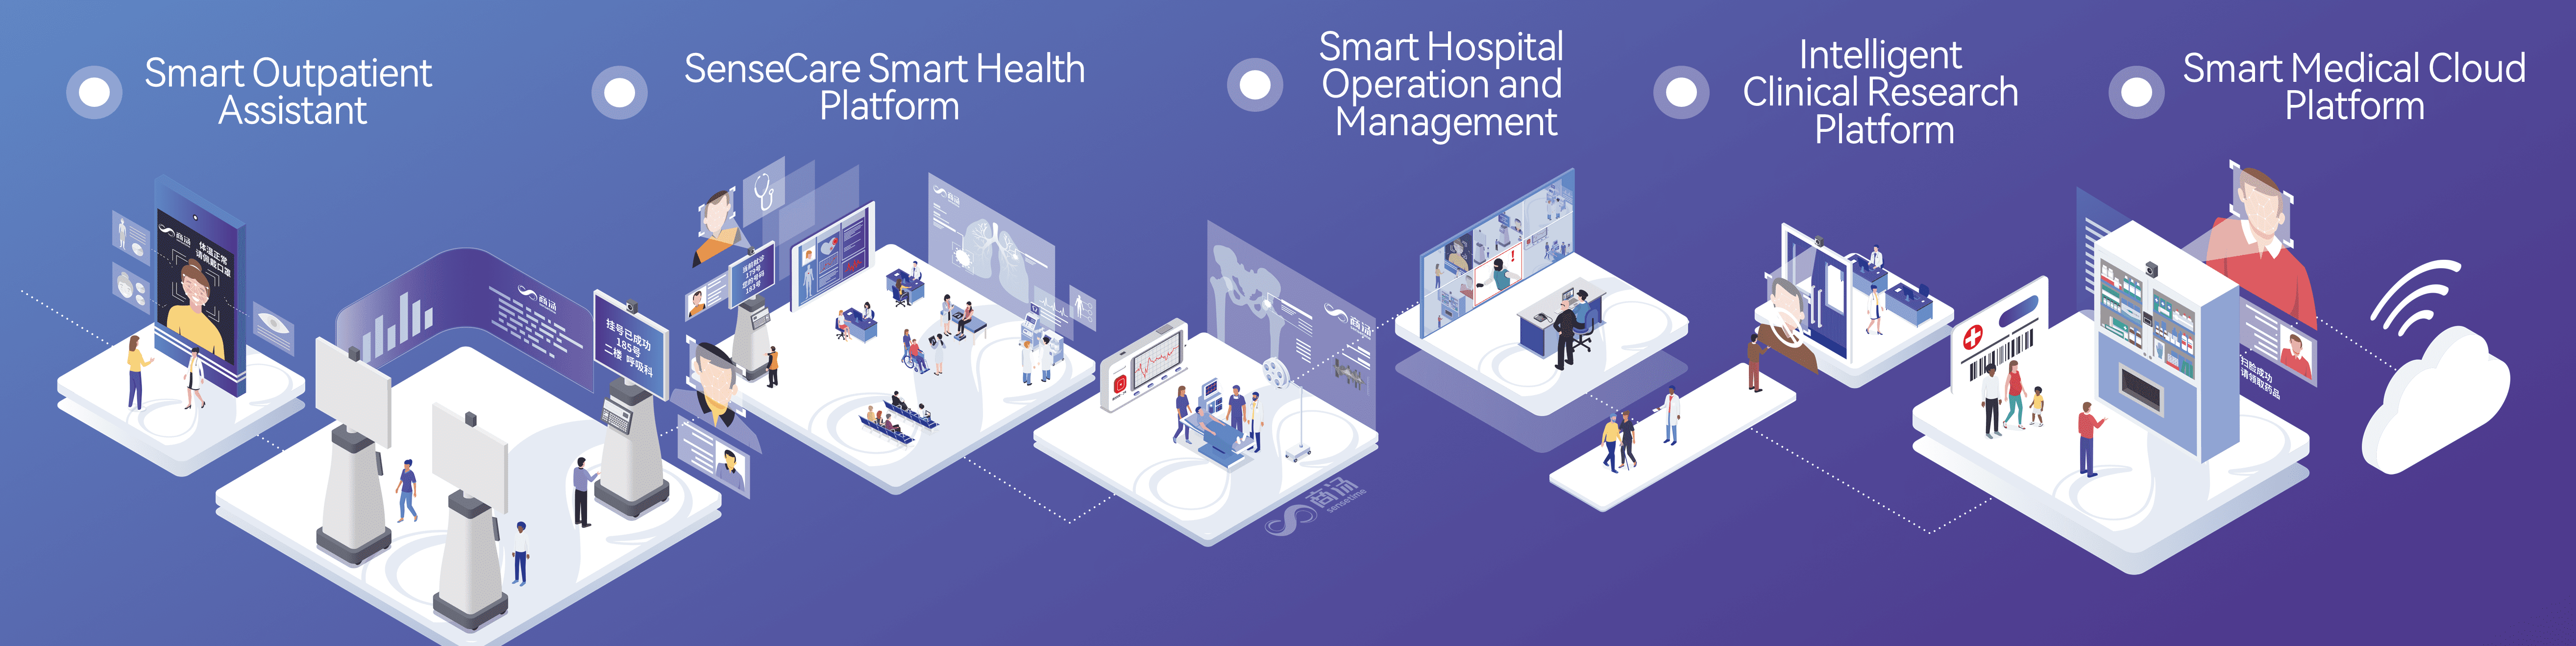 SenseTime’s Smart Hospital Solution product portfolio.png